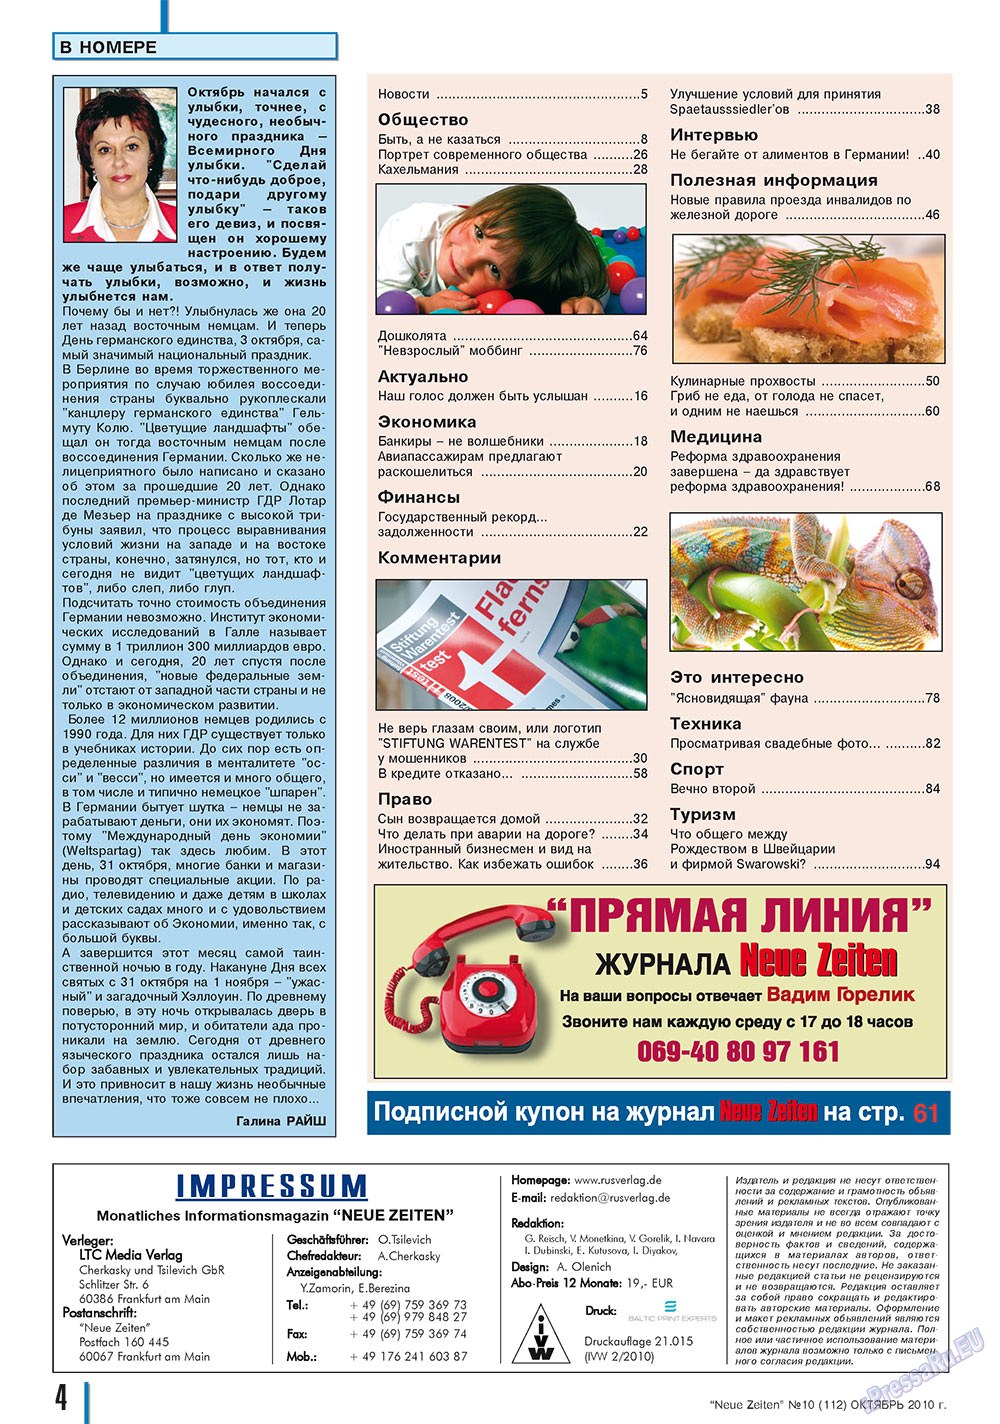 Neue Zeiten (журнал). 2010 год, номер 10, стр. 4